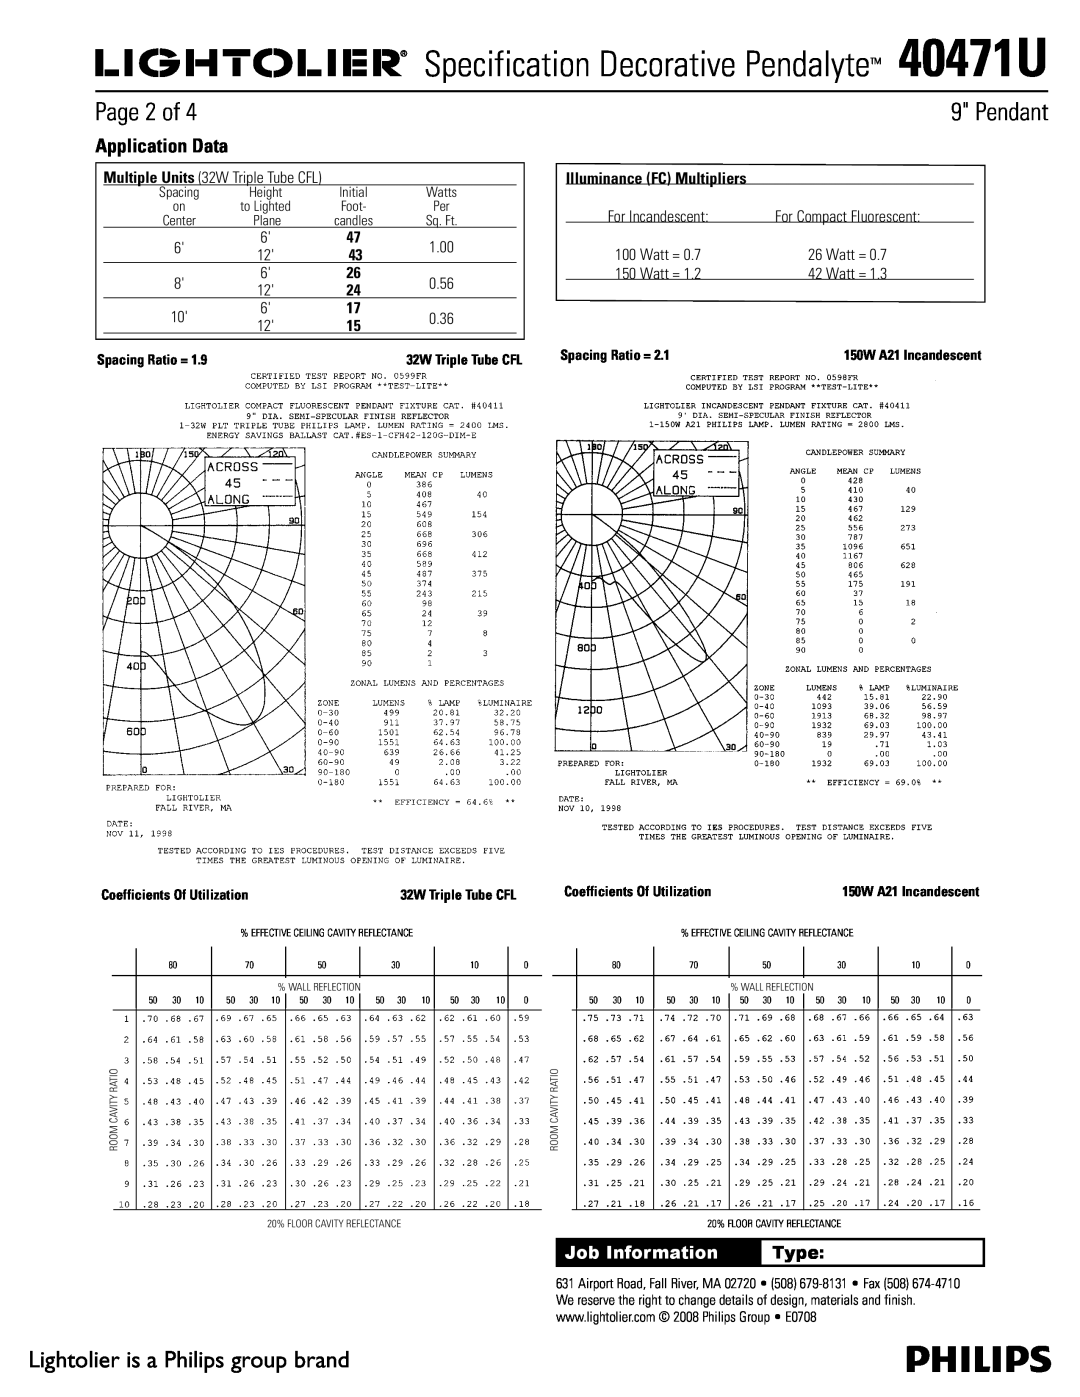 Lightolier manual Specification Decorative Pendalyte 40471U, Page 2 of, Application Data, Pendant, Job Information Type 